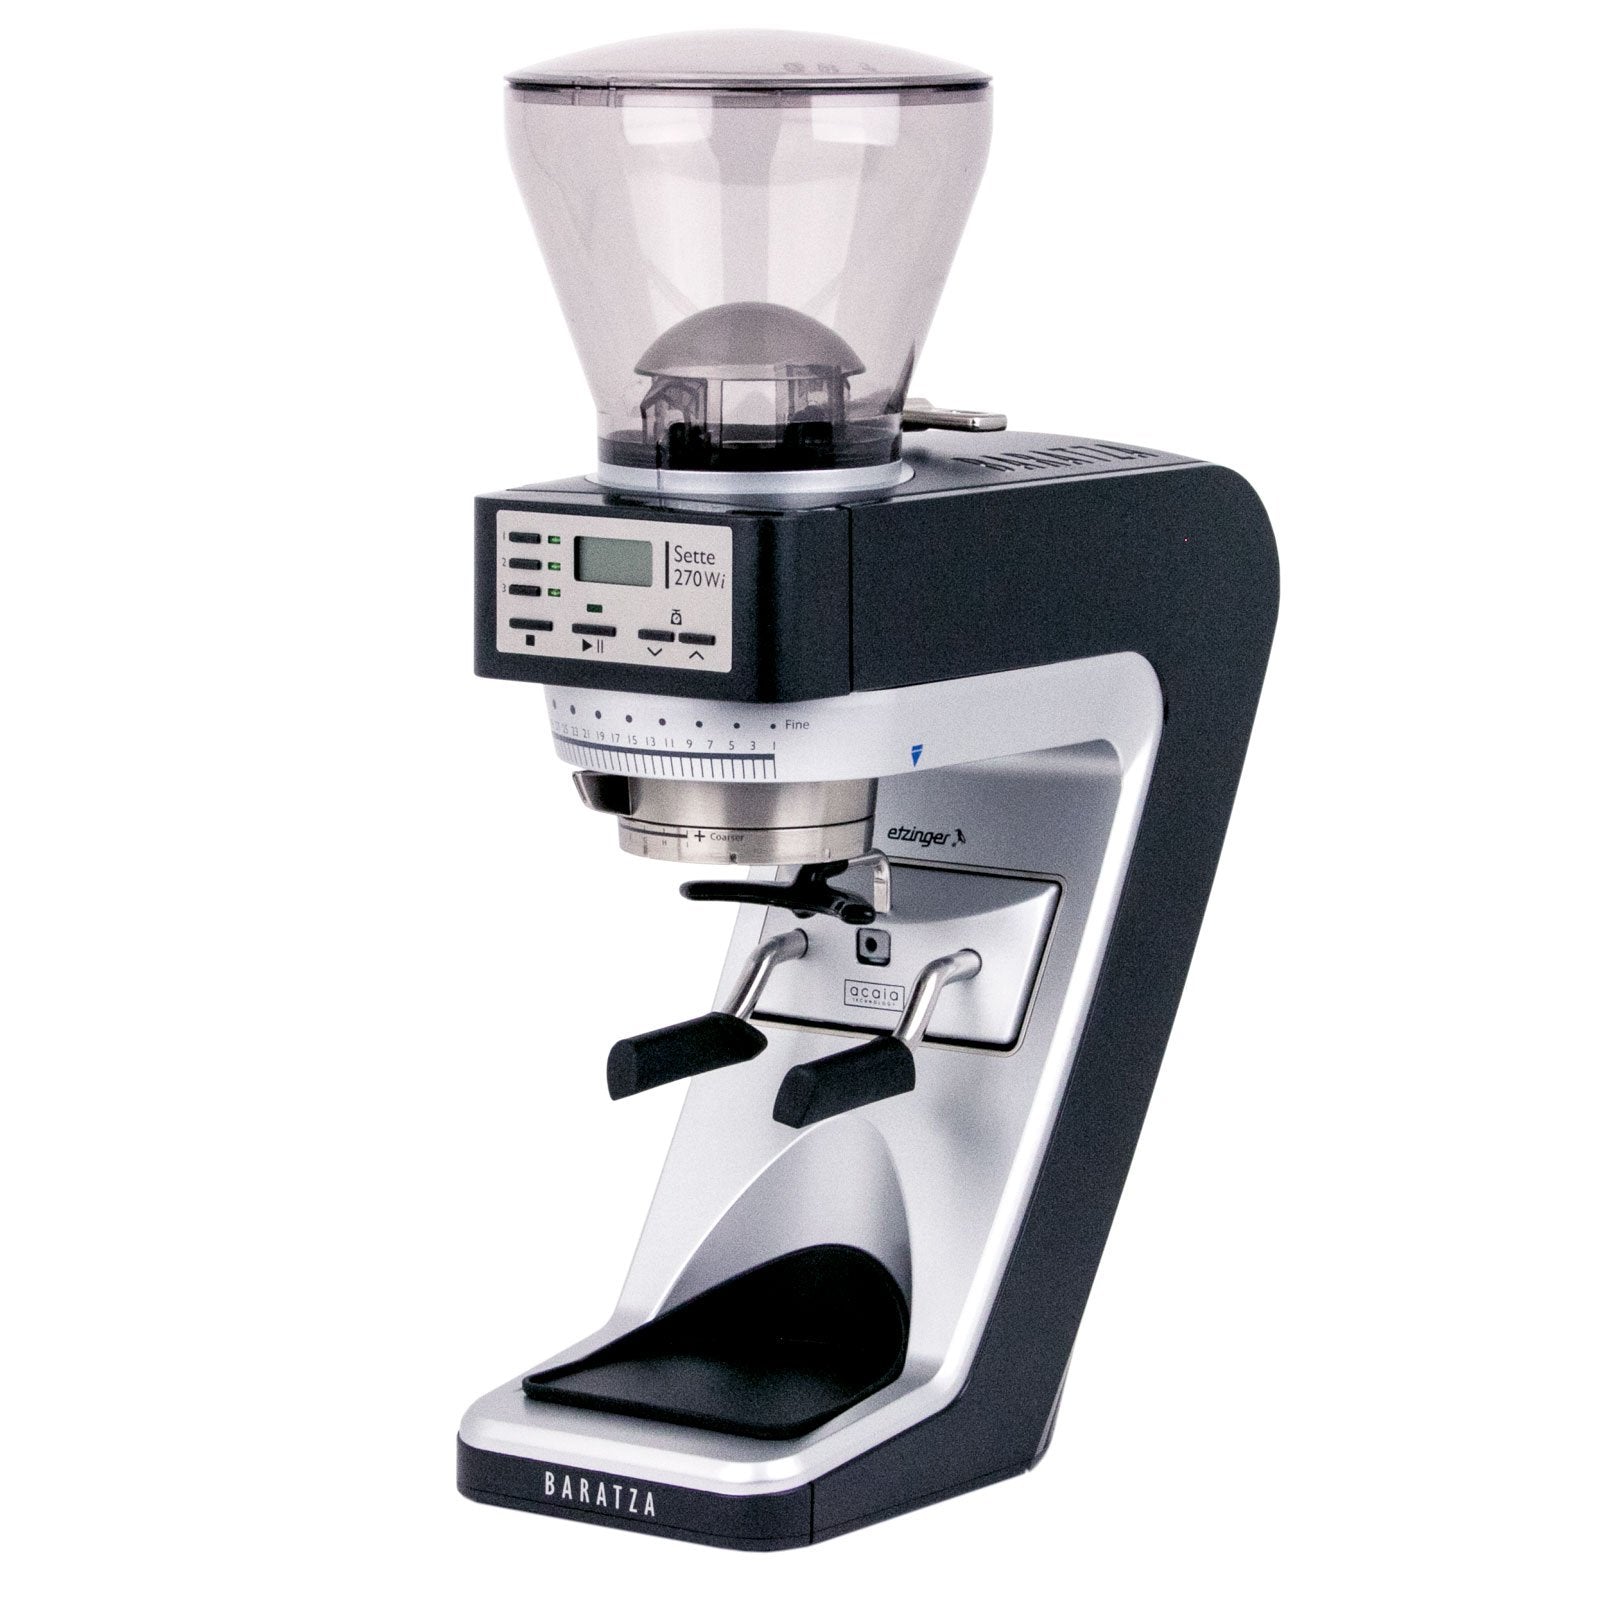 Baratza Sette 270Wi Espresso Grinder – Unity Sourcing & Roasting